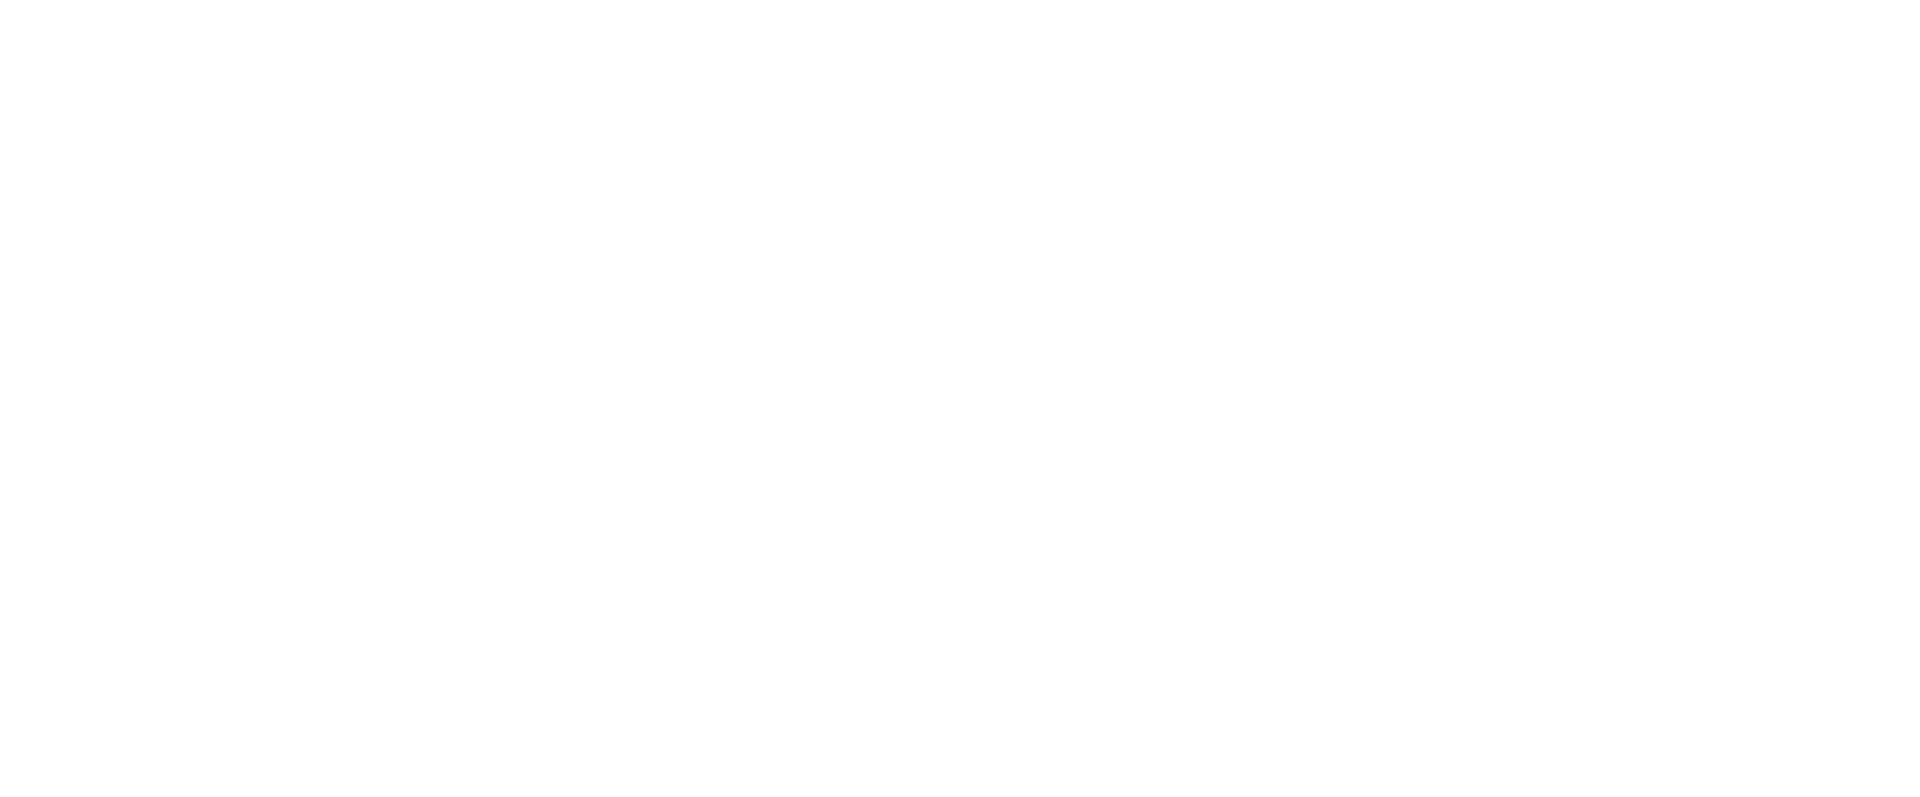 Pre-Master's - University of Greenwich International College logo